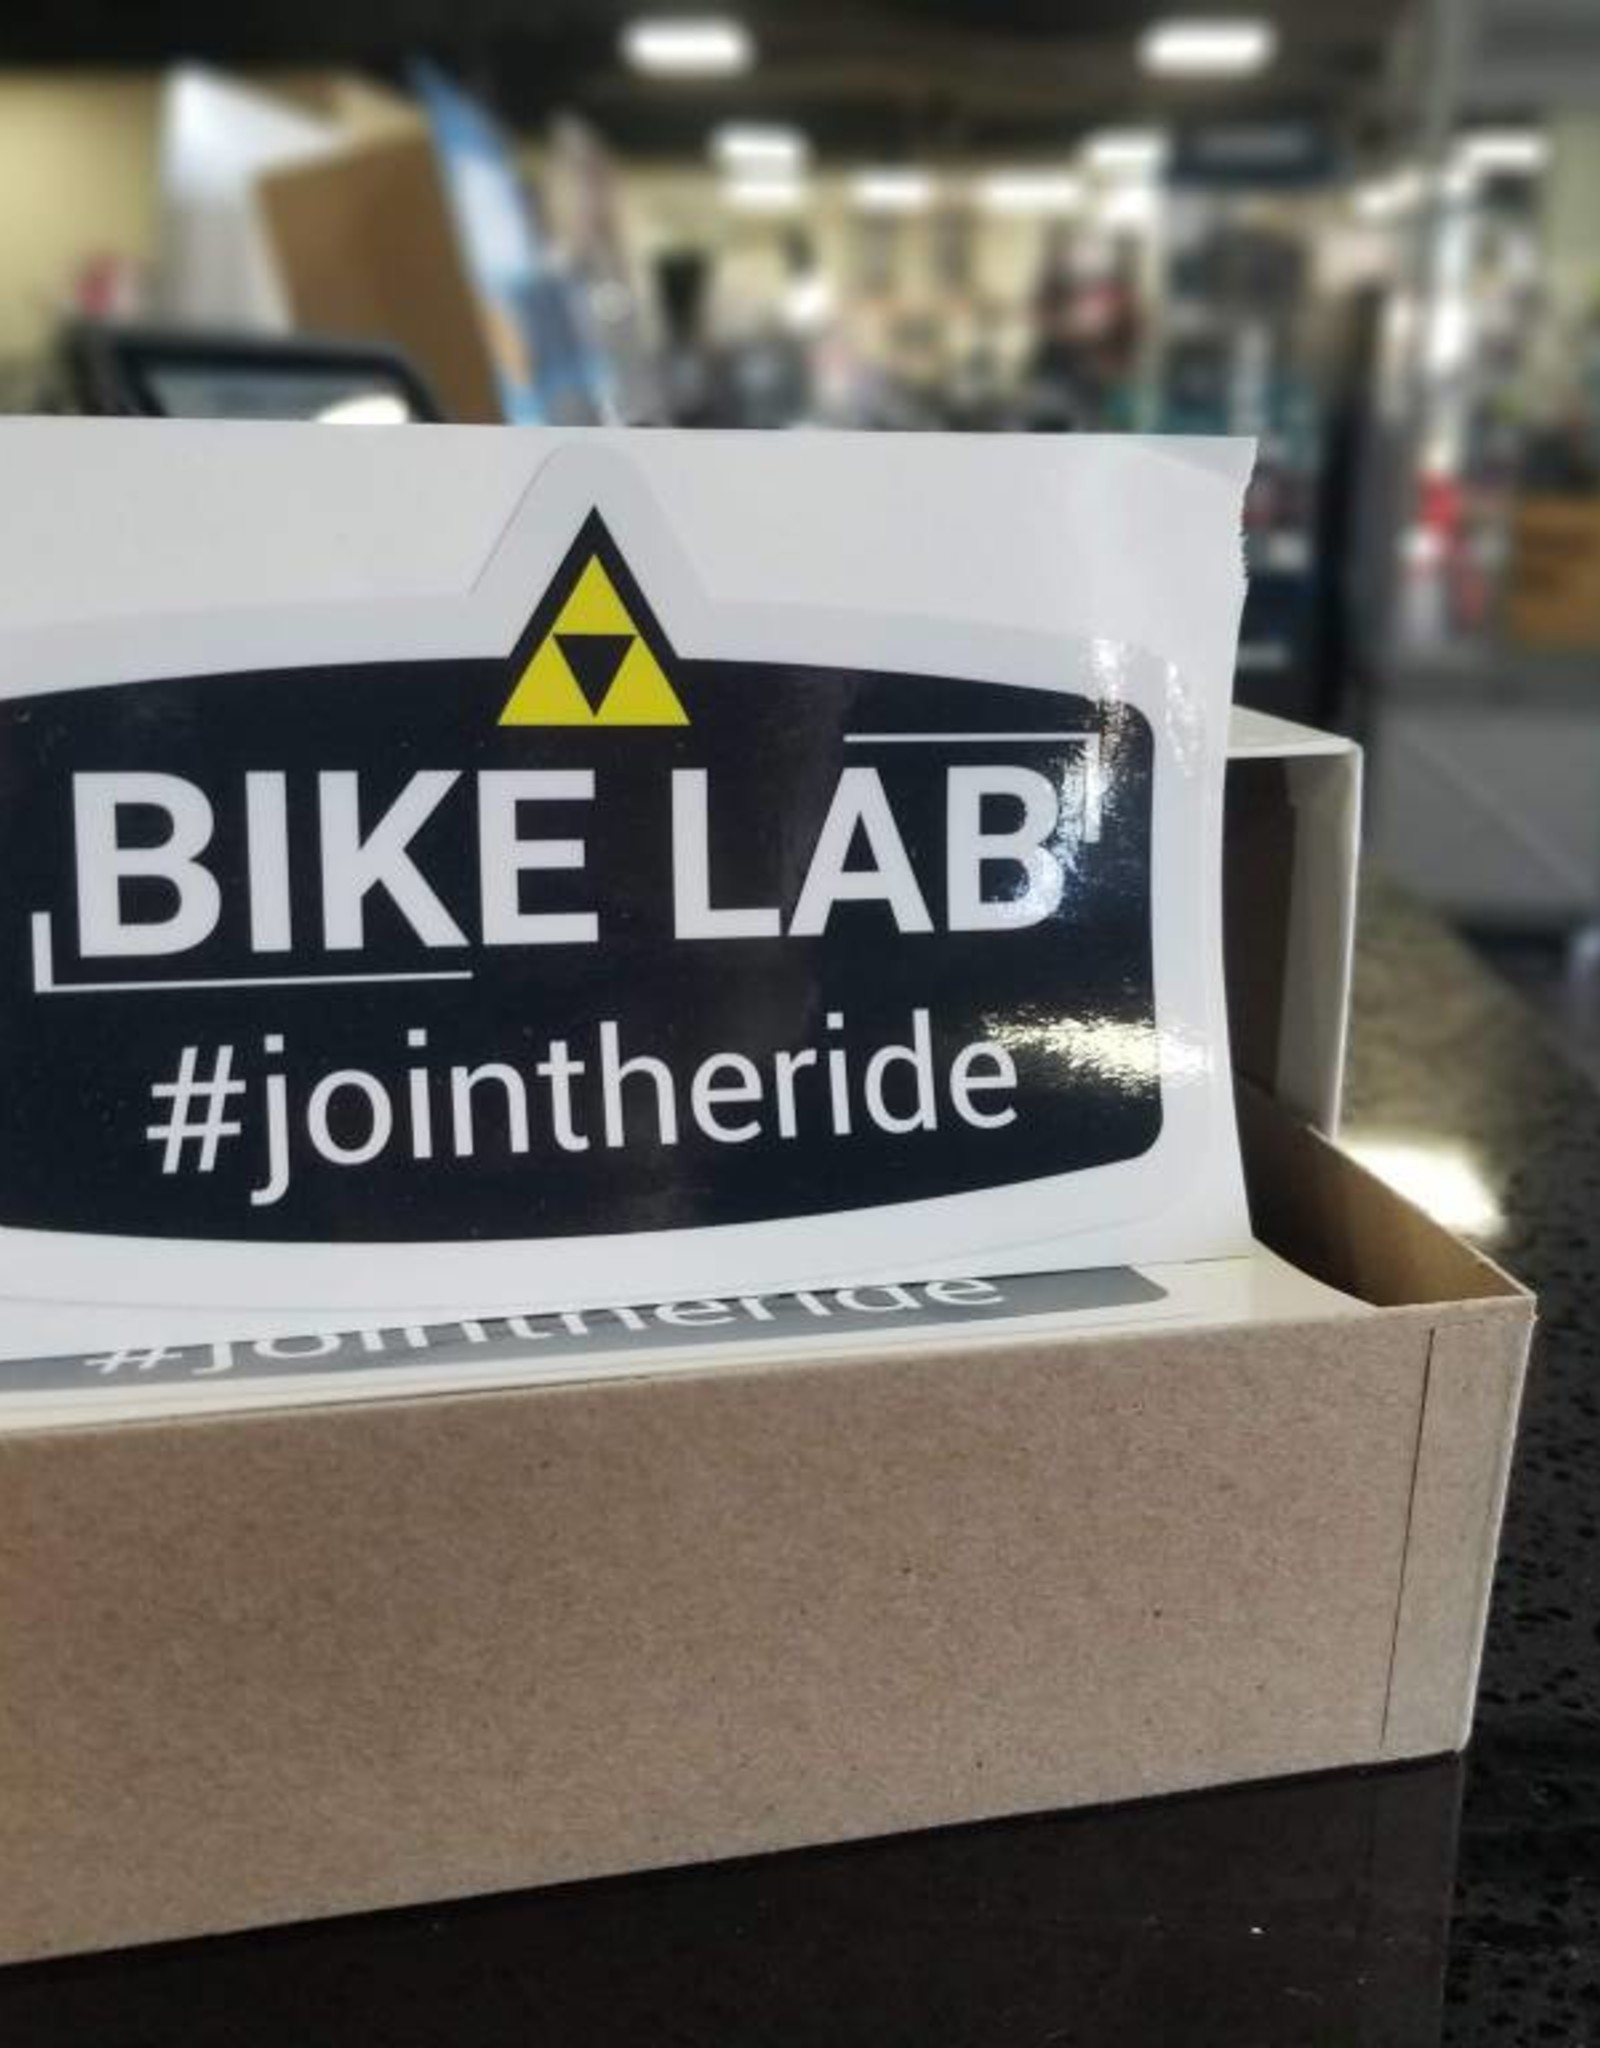 Bike Lab Car Sticker